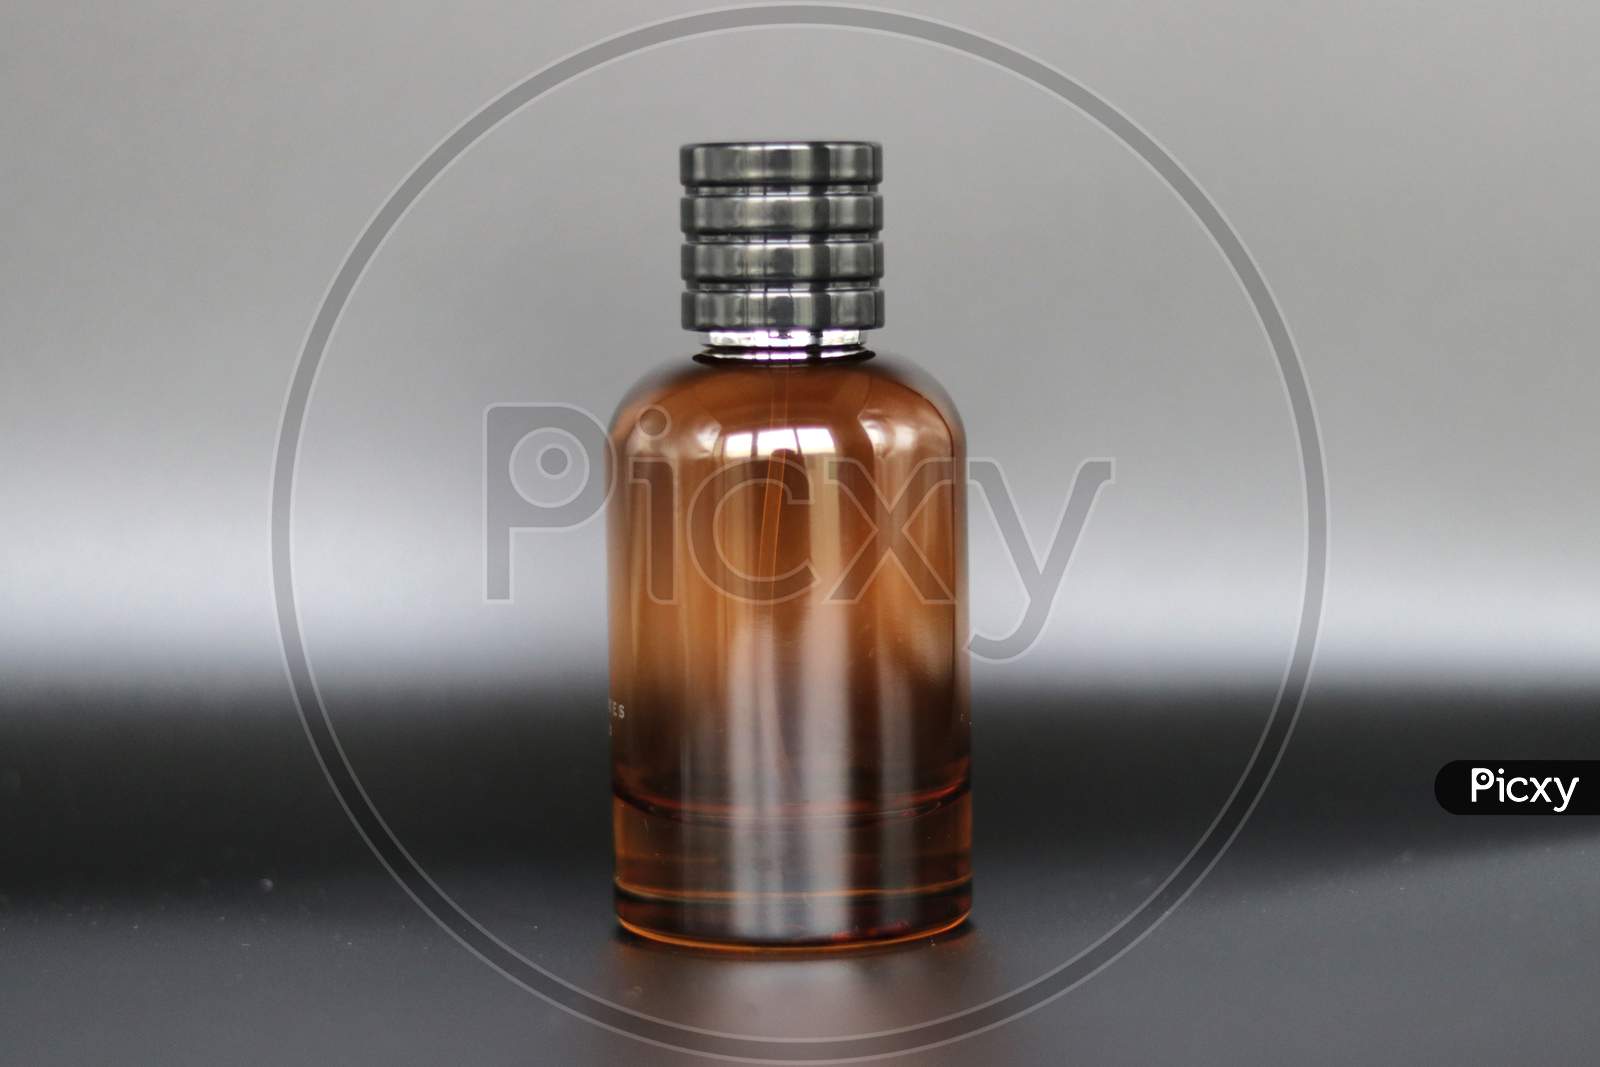 Perfume Bottle With Black Background